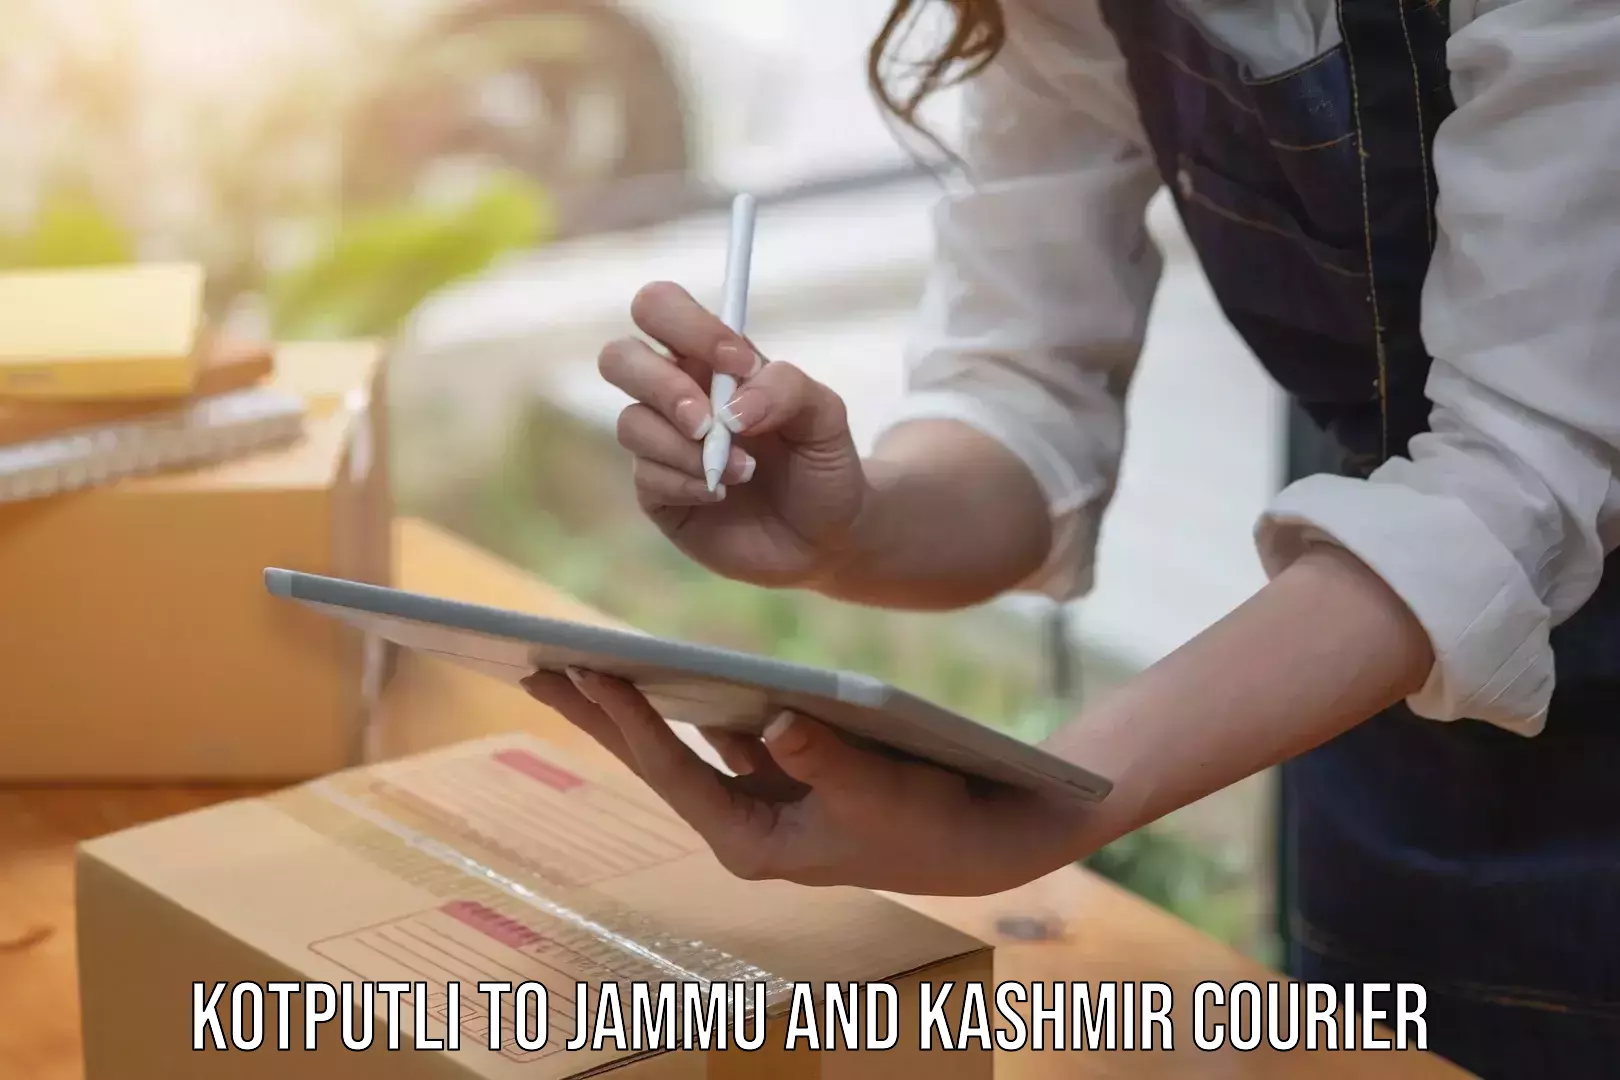 International courier networks Kotputli to Srinagar Kashmir